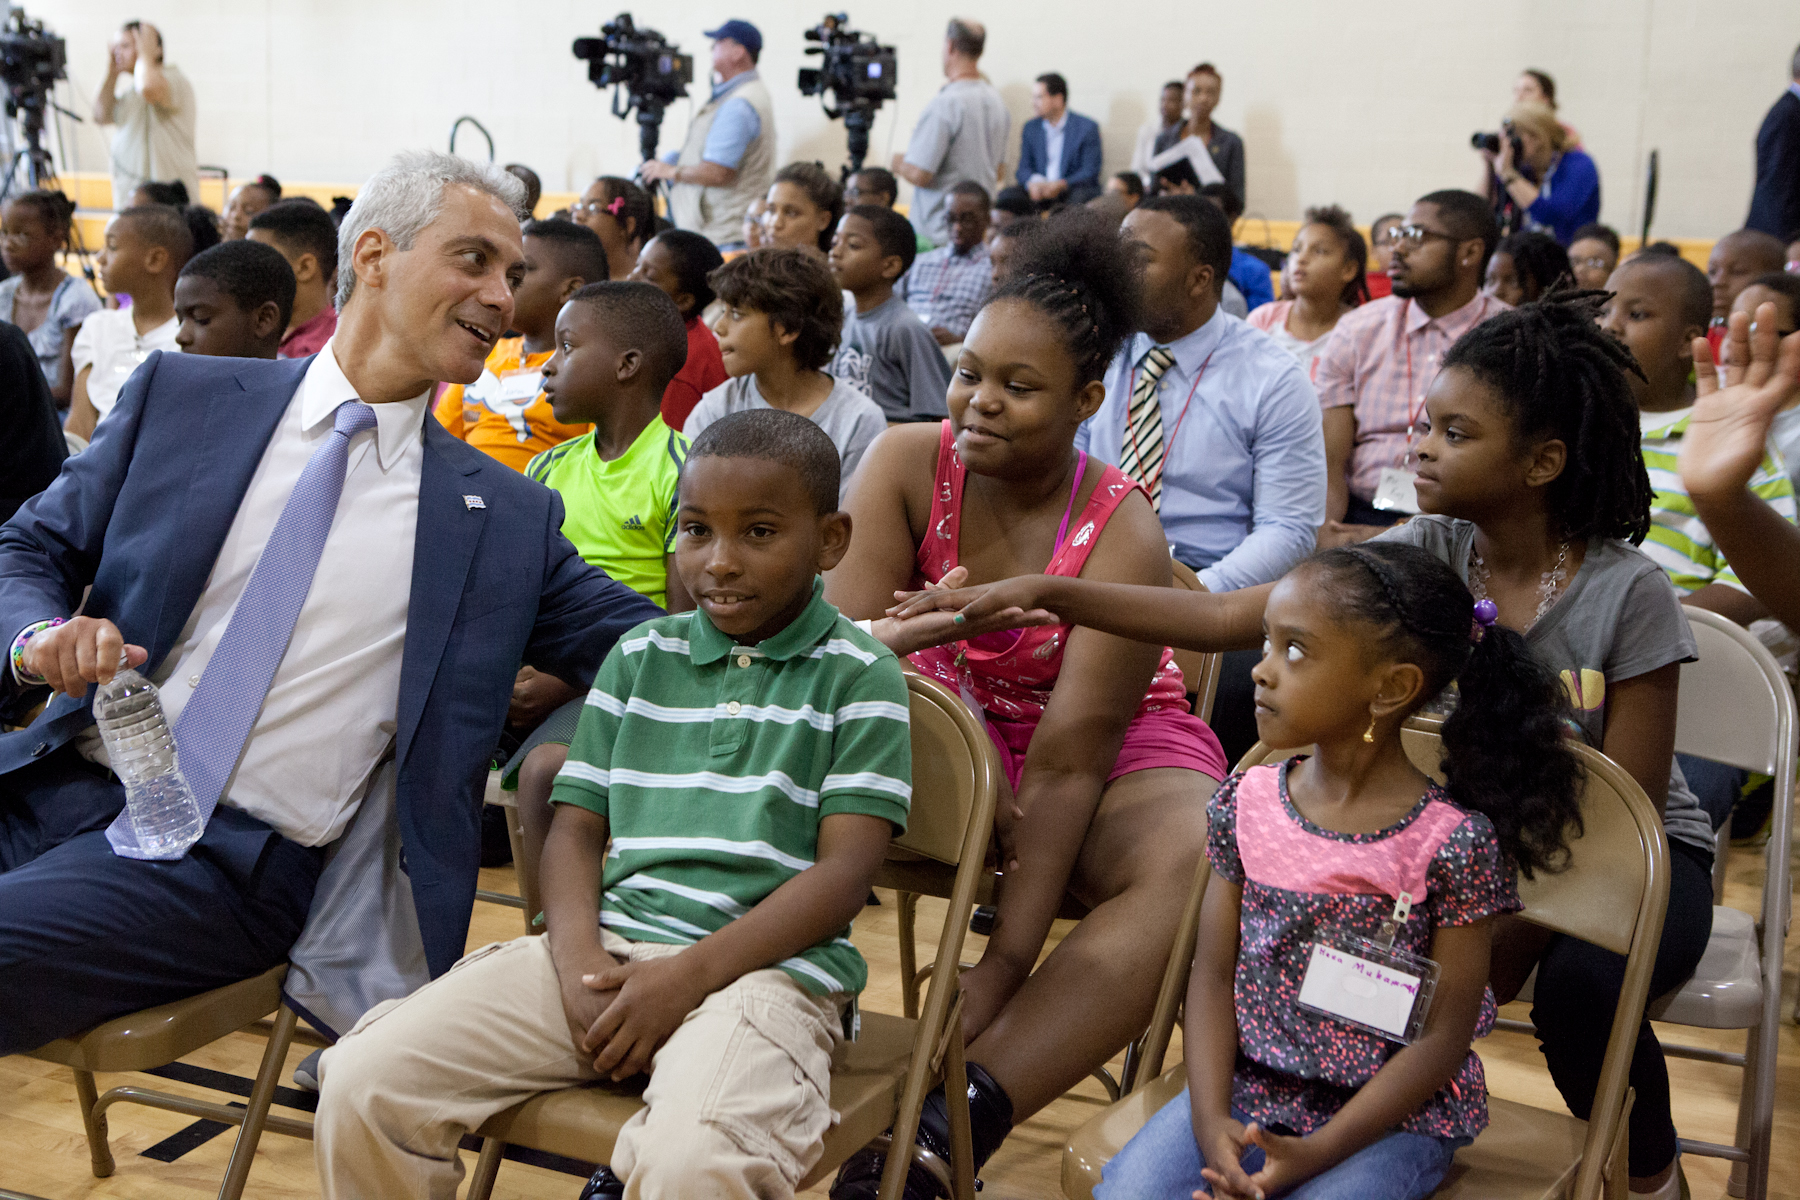 Mayor Emanuel visits with SEEK students at program kick off